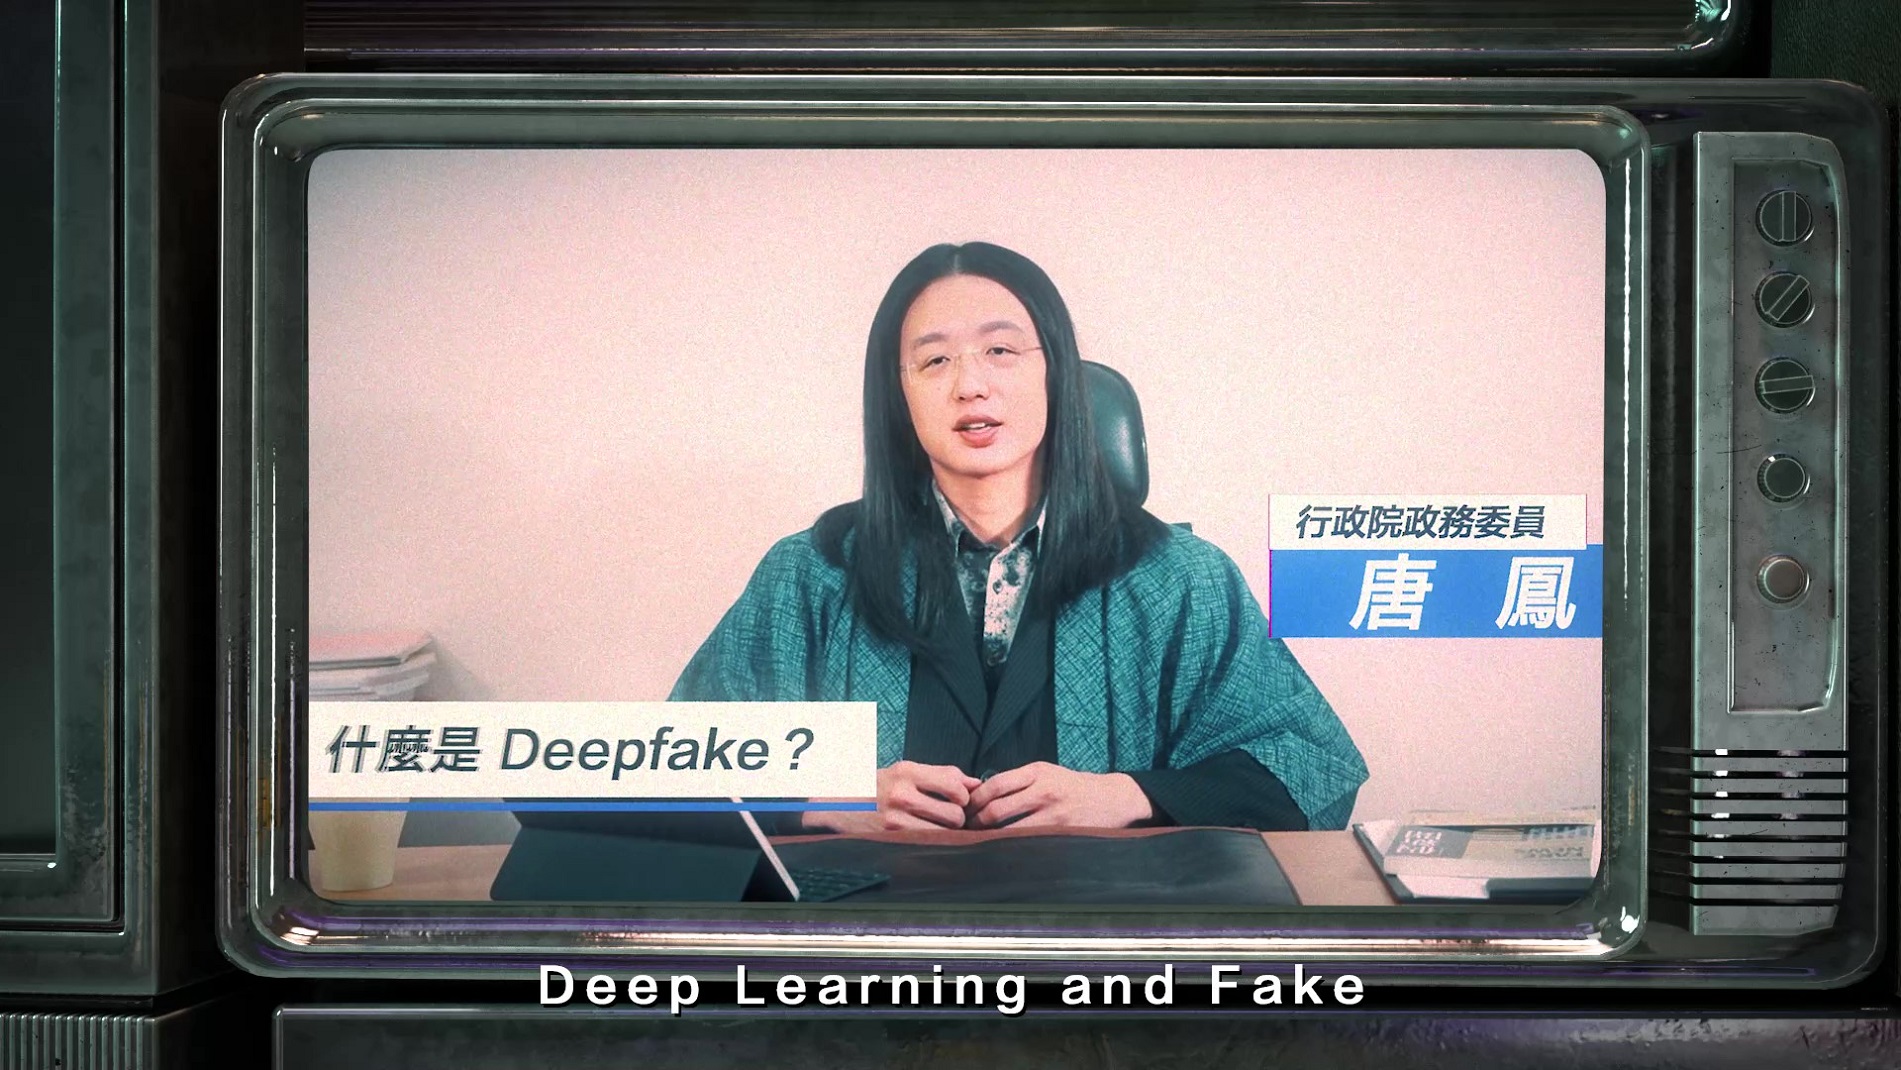 認識Deepfake防範假訊息